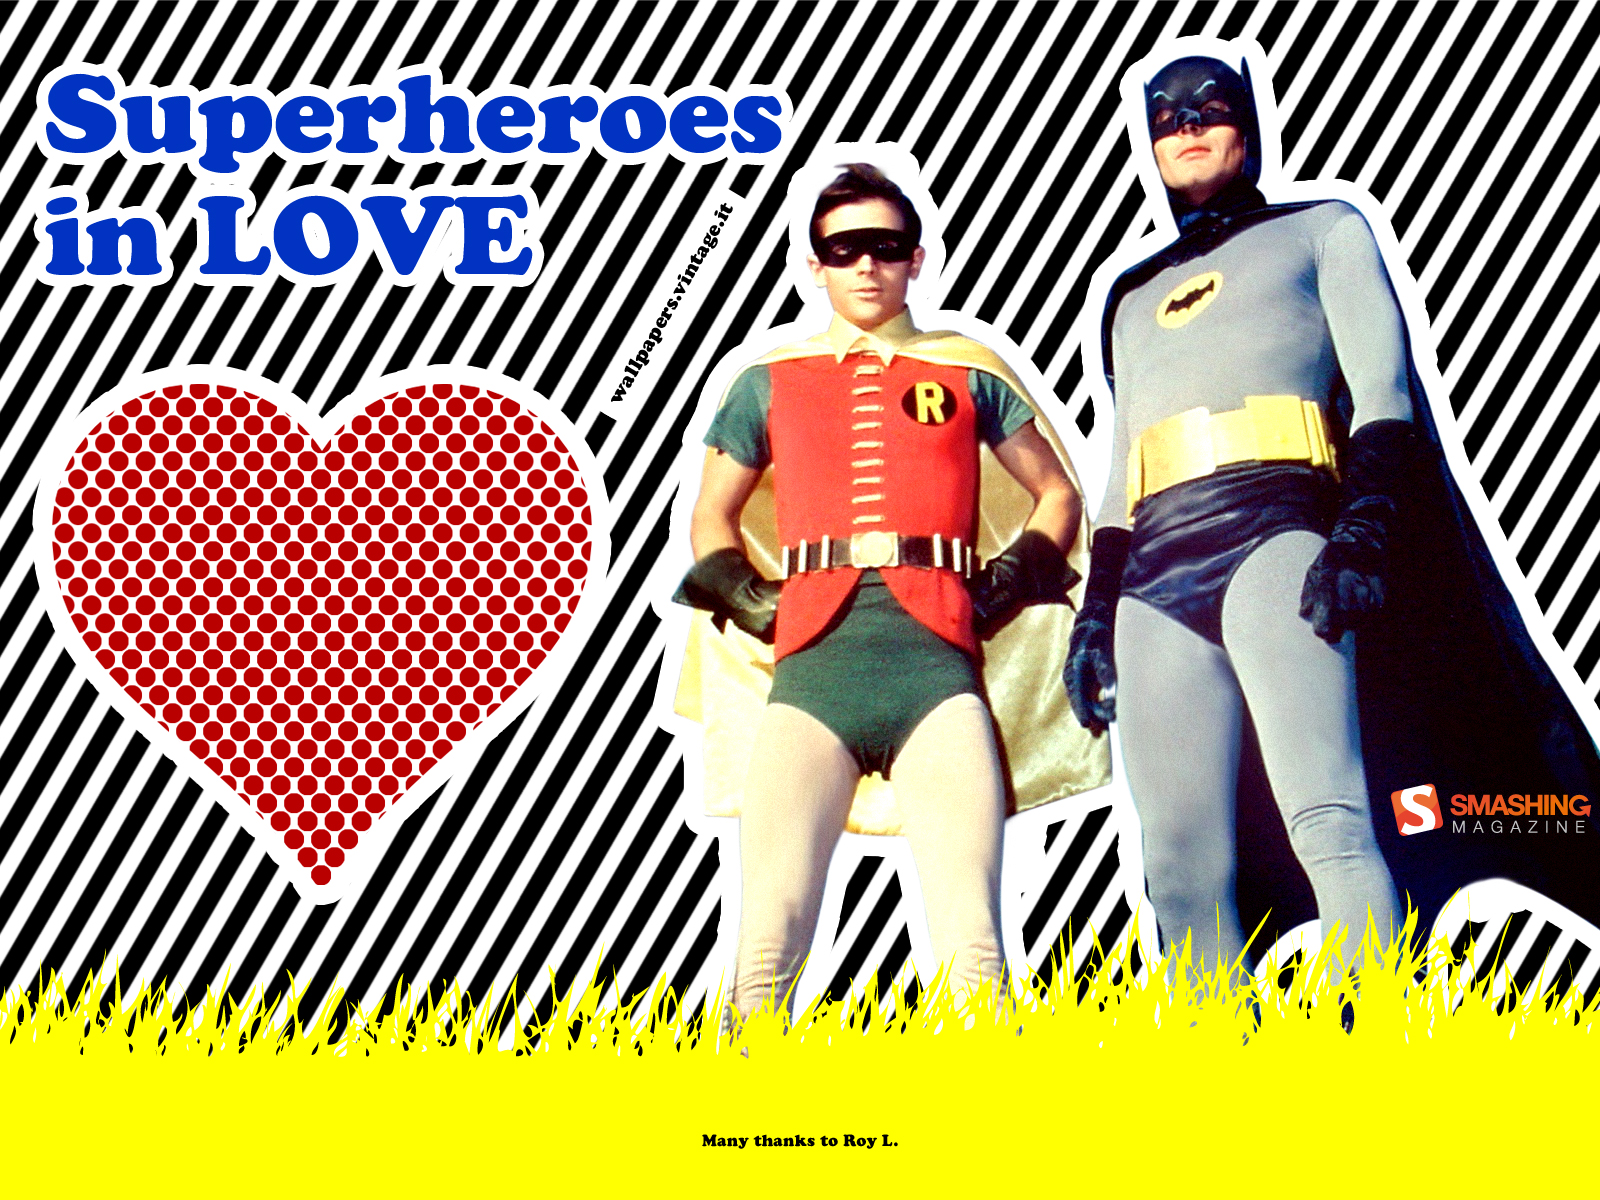 Superheroes in love Batman and Robin wallpaper 1600x1200jpg 1600x1200